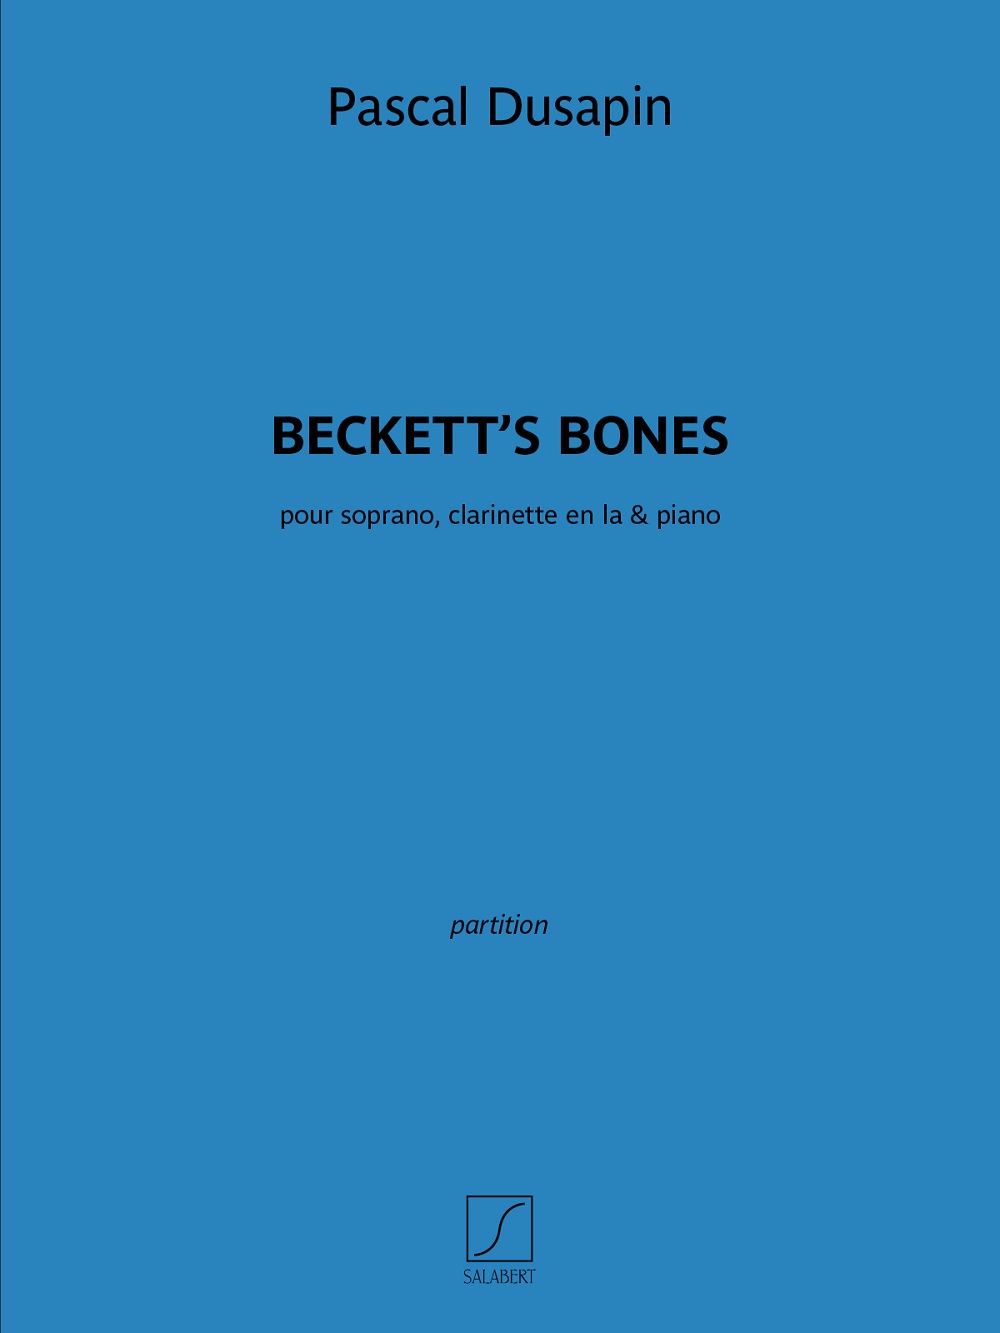 P. Dusapin: Becketts Bones: Soprano